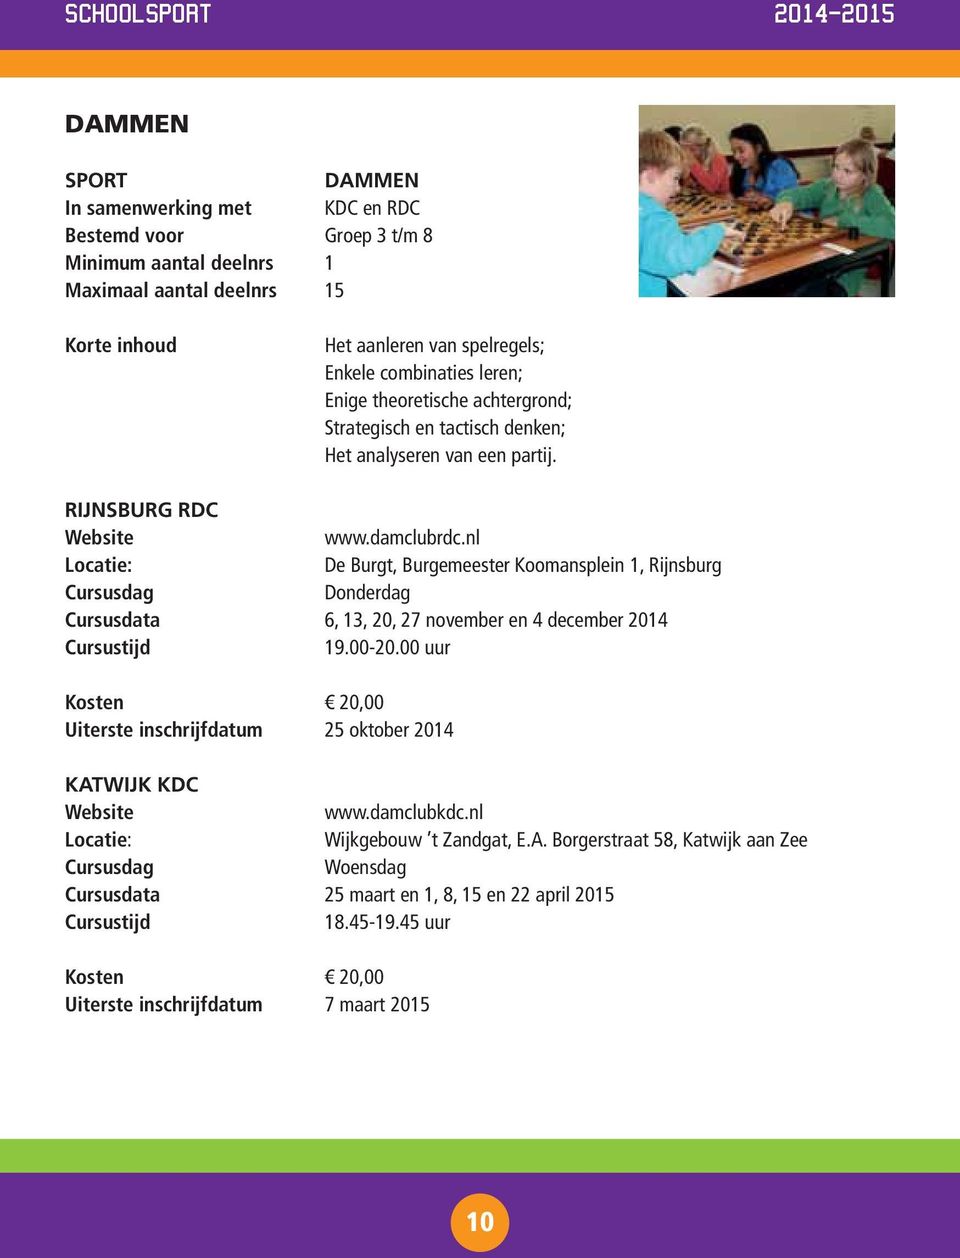 nl : De Burgt, Burgemeester Koomansplein 1, Rijnsburg Donderdag Cursusdata 6, 13, 20, 27 november en 4 december 2014 19.00-20.